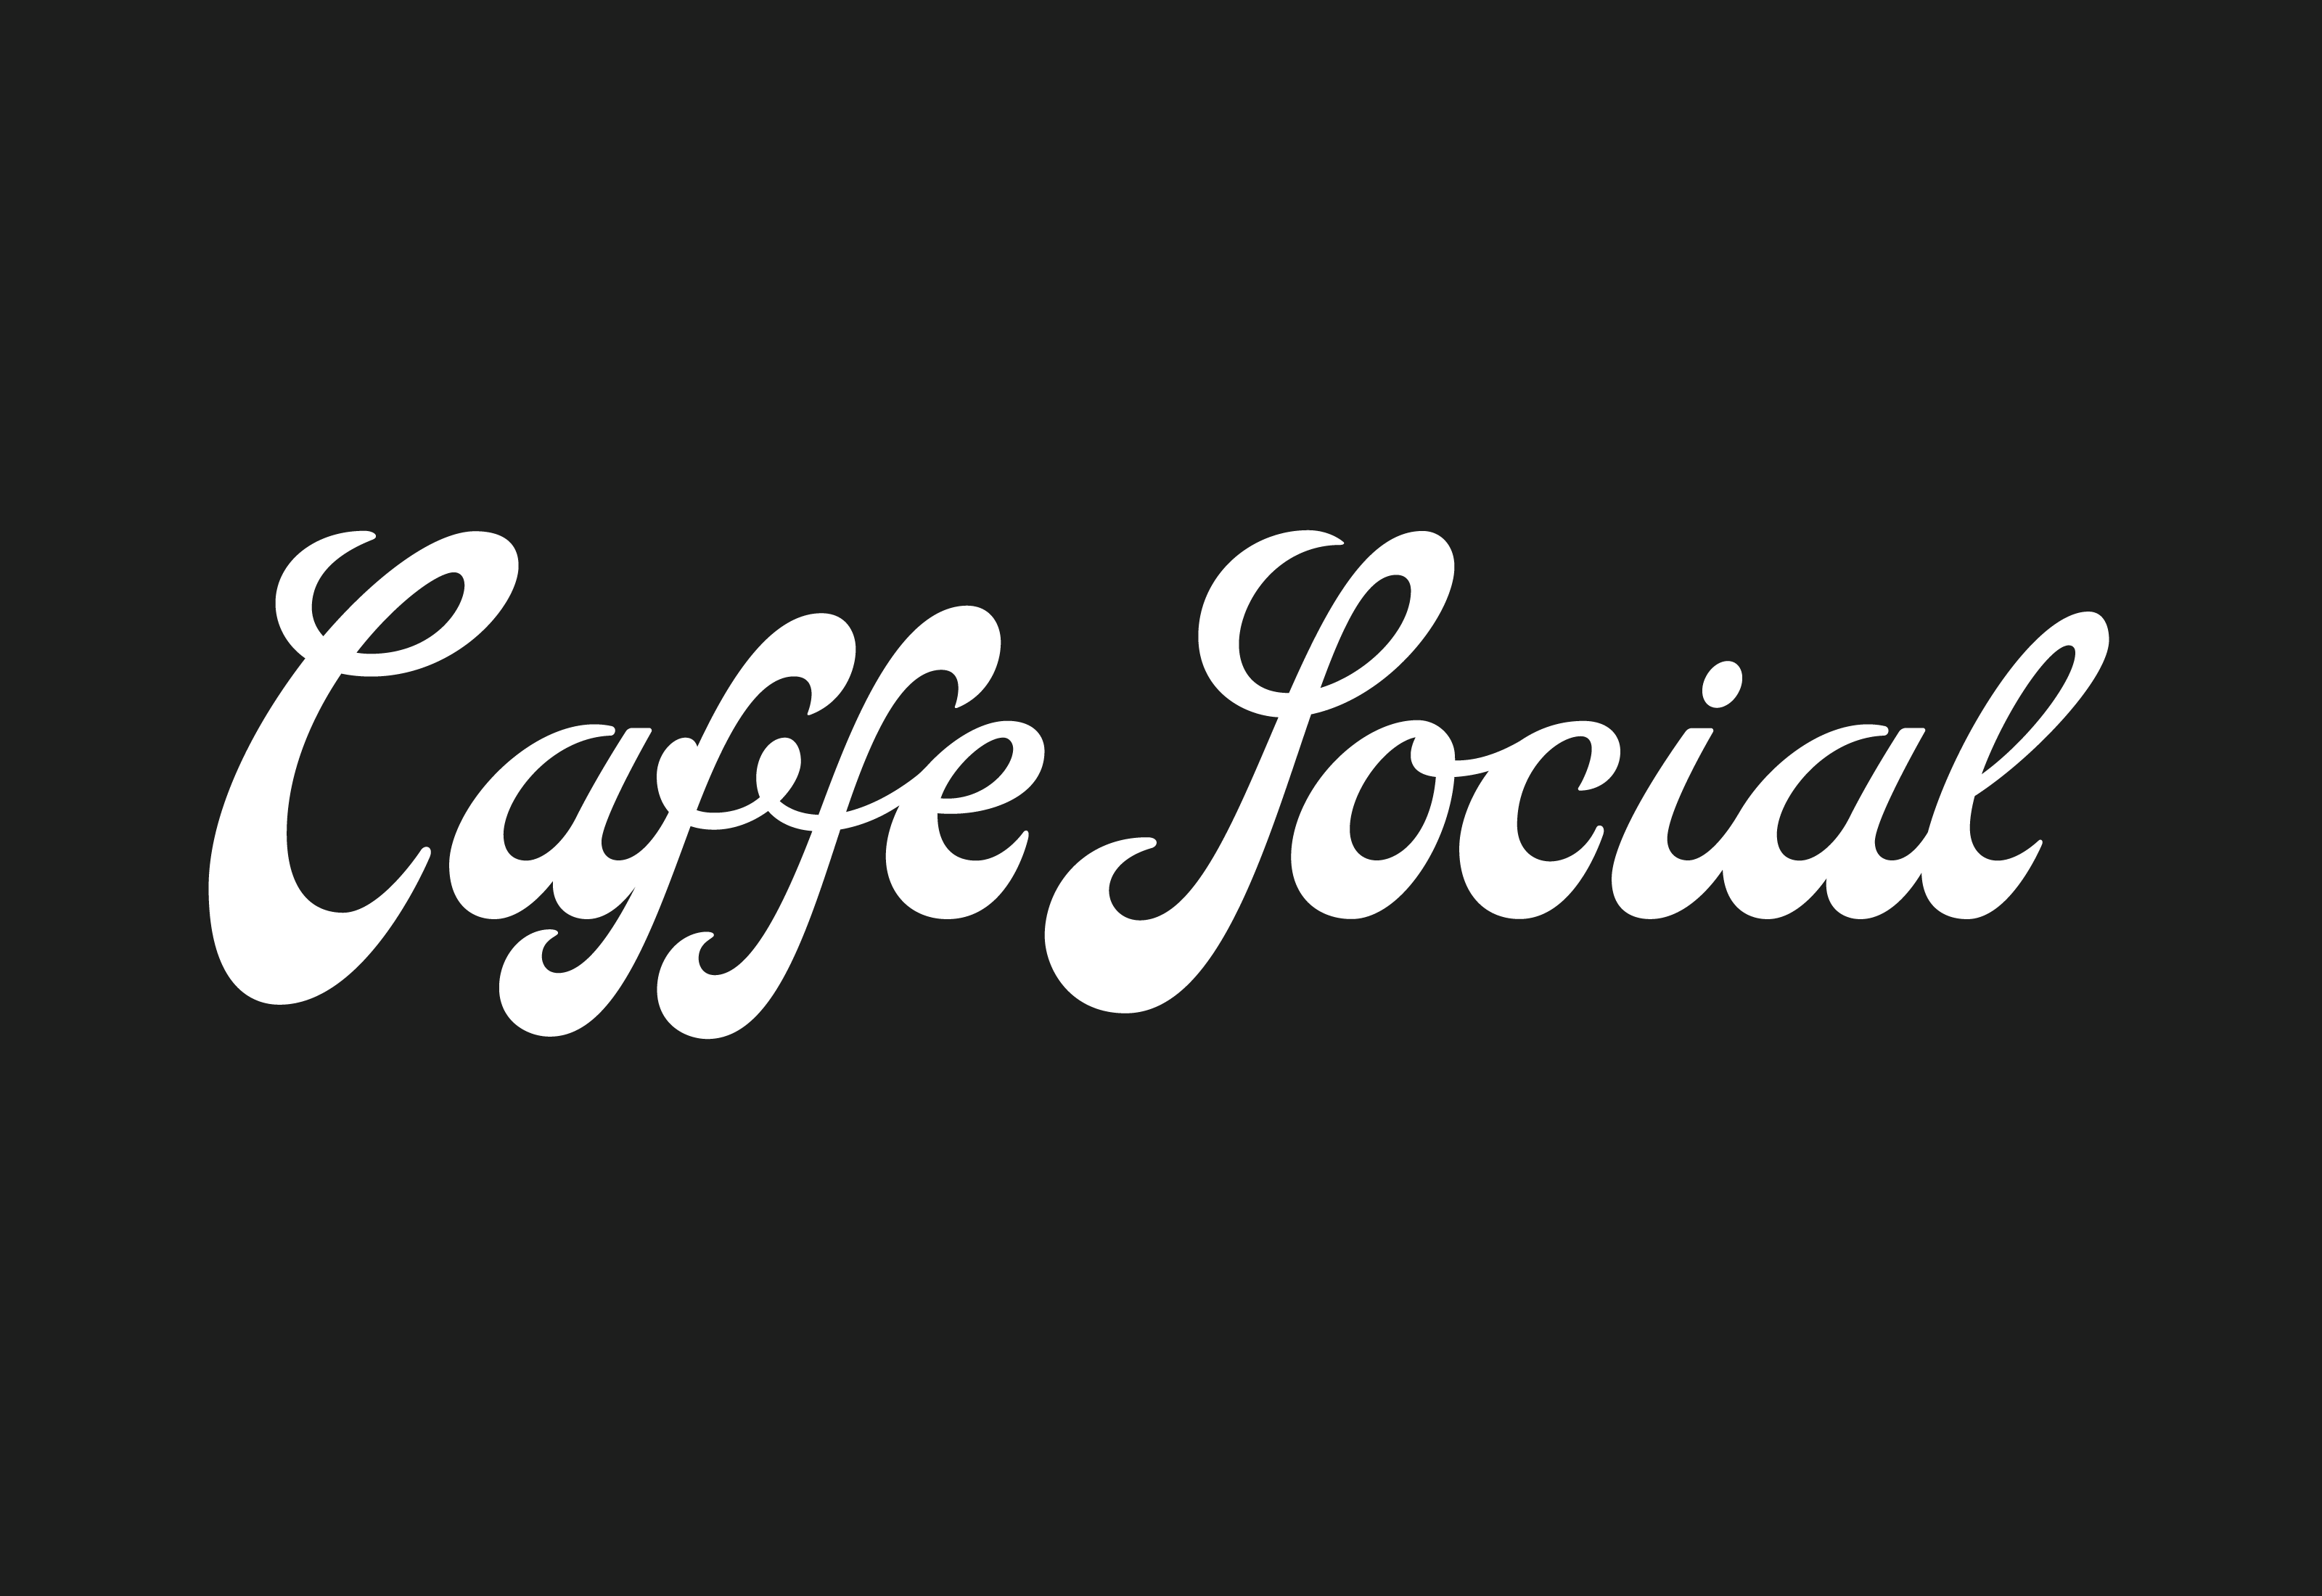 Caffe-Social-1-3200